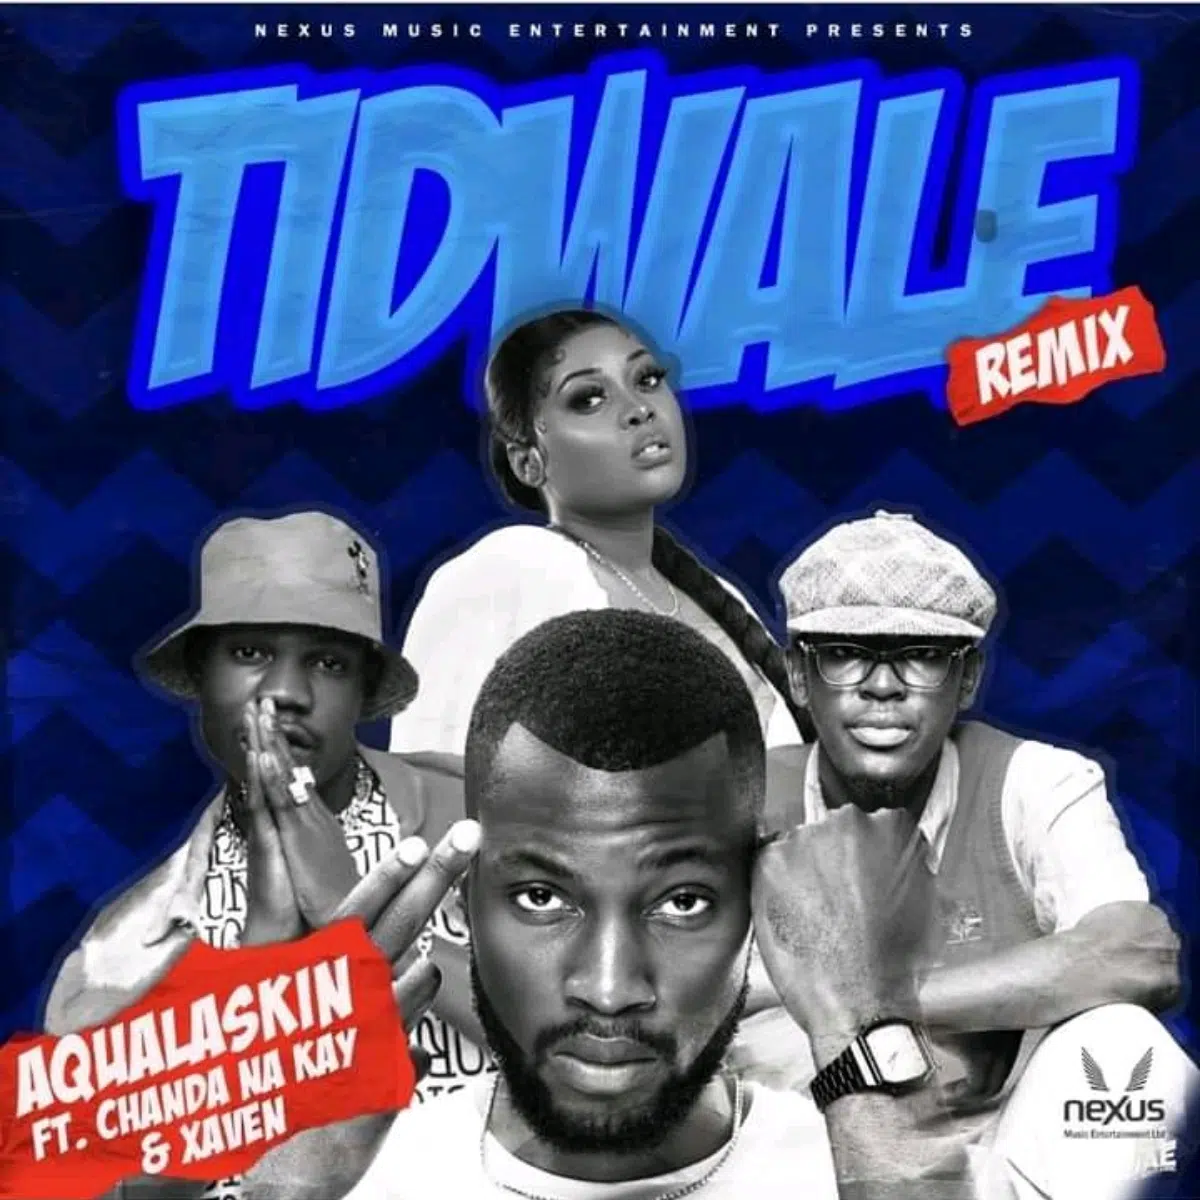 DOWNLOAD: Aqualaskin Ft Chanda Na Kay & Xaven – “Tidwale Remix” Mp3